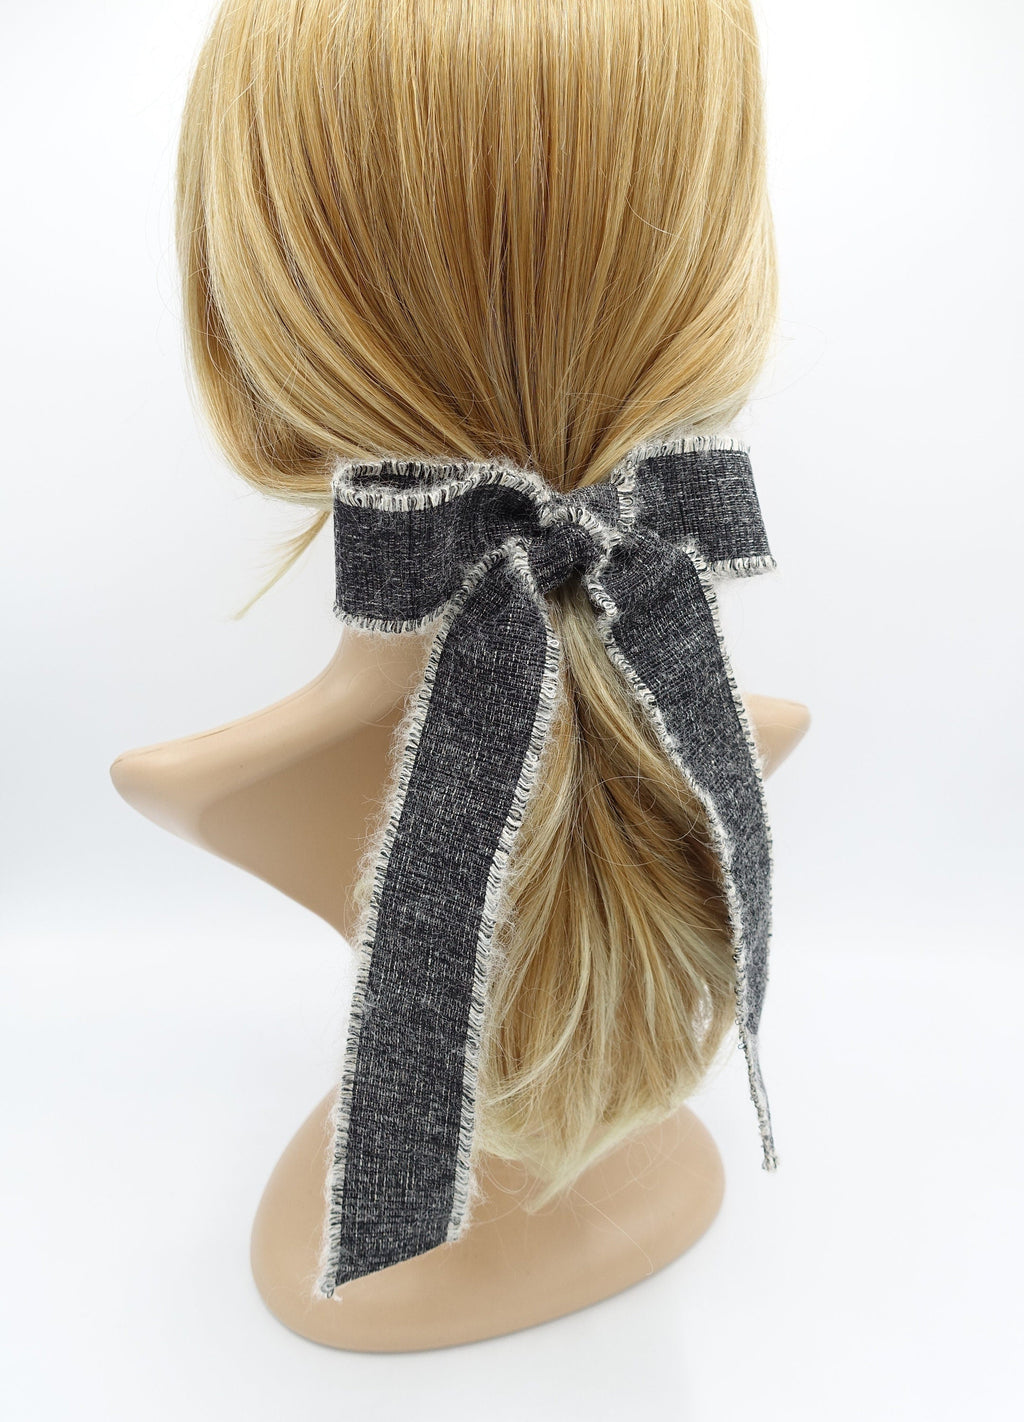 veryshine.com Barrette (Bow) Black woolen hair bow frayed edge tail hair accessory for women